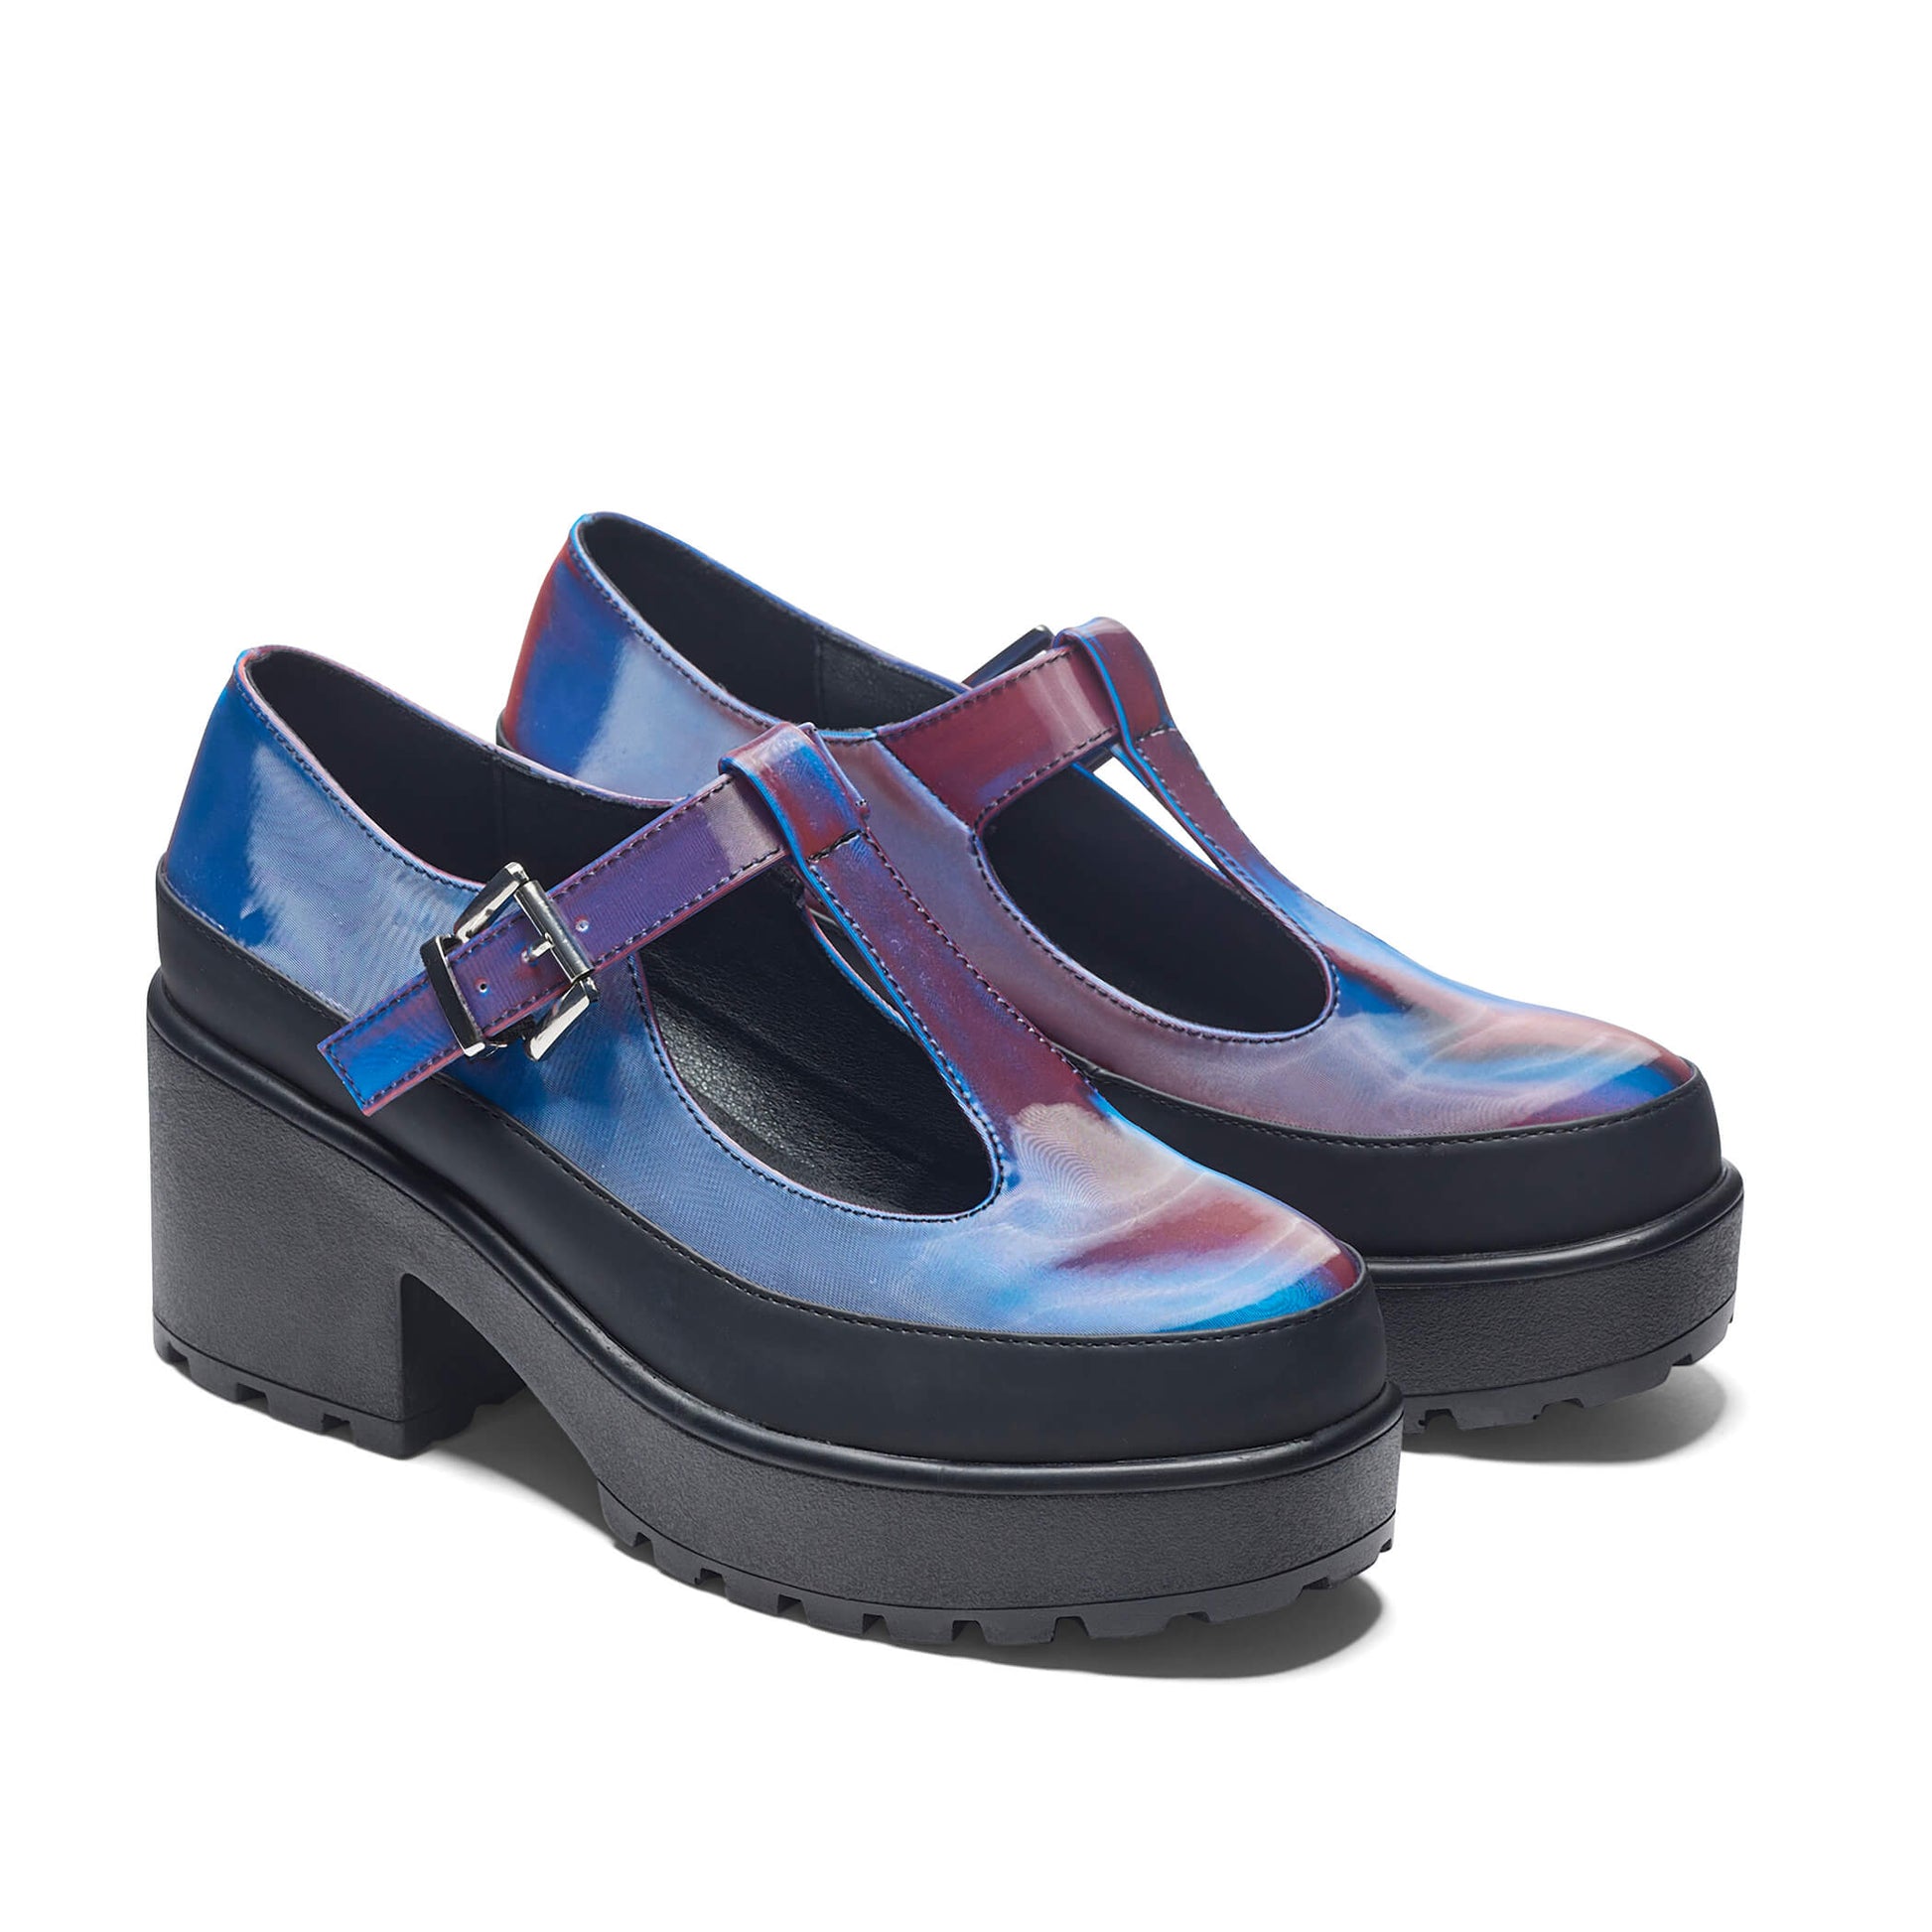 Sai Iridescent Mary Jane Shoes 'Soap Bubbles Edition' - Multi - KOI Footwear - Three-Quarter View